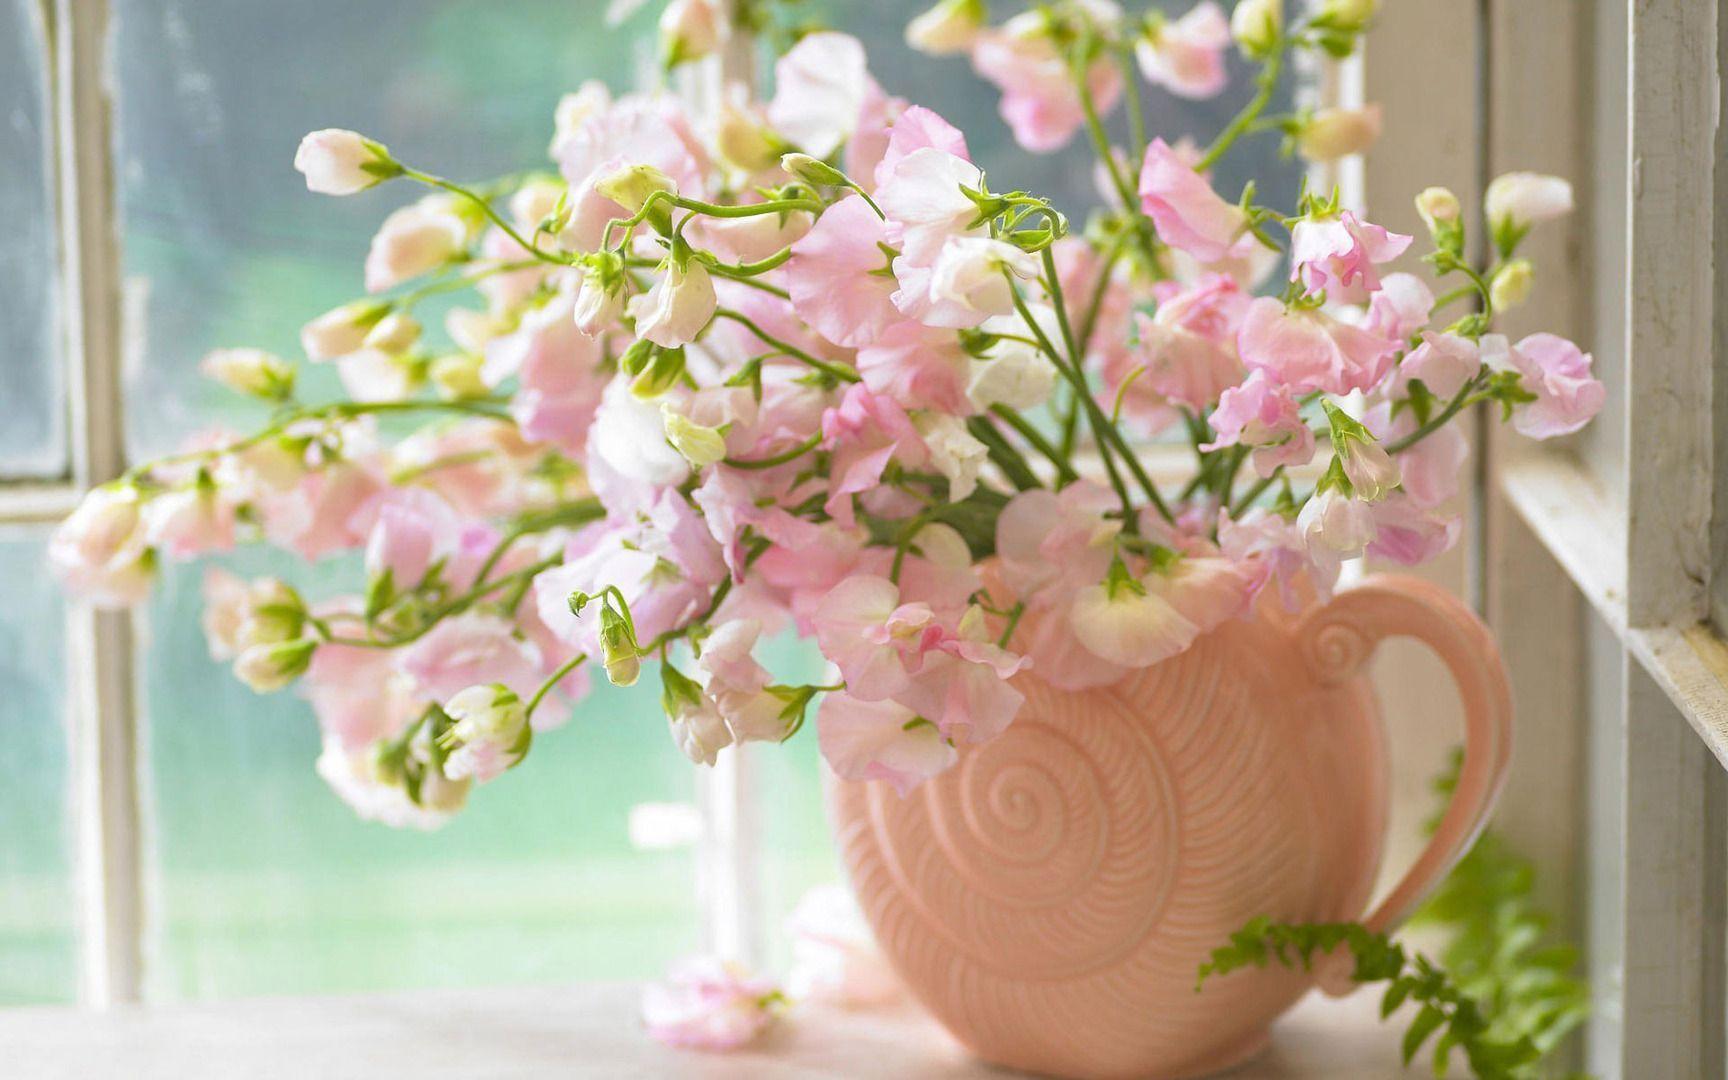 Pink Sweet Peas 1080p Flowers HD Wallpaper for Desktop. HD